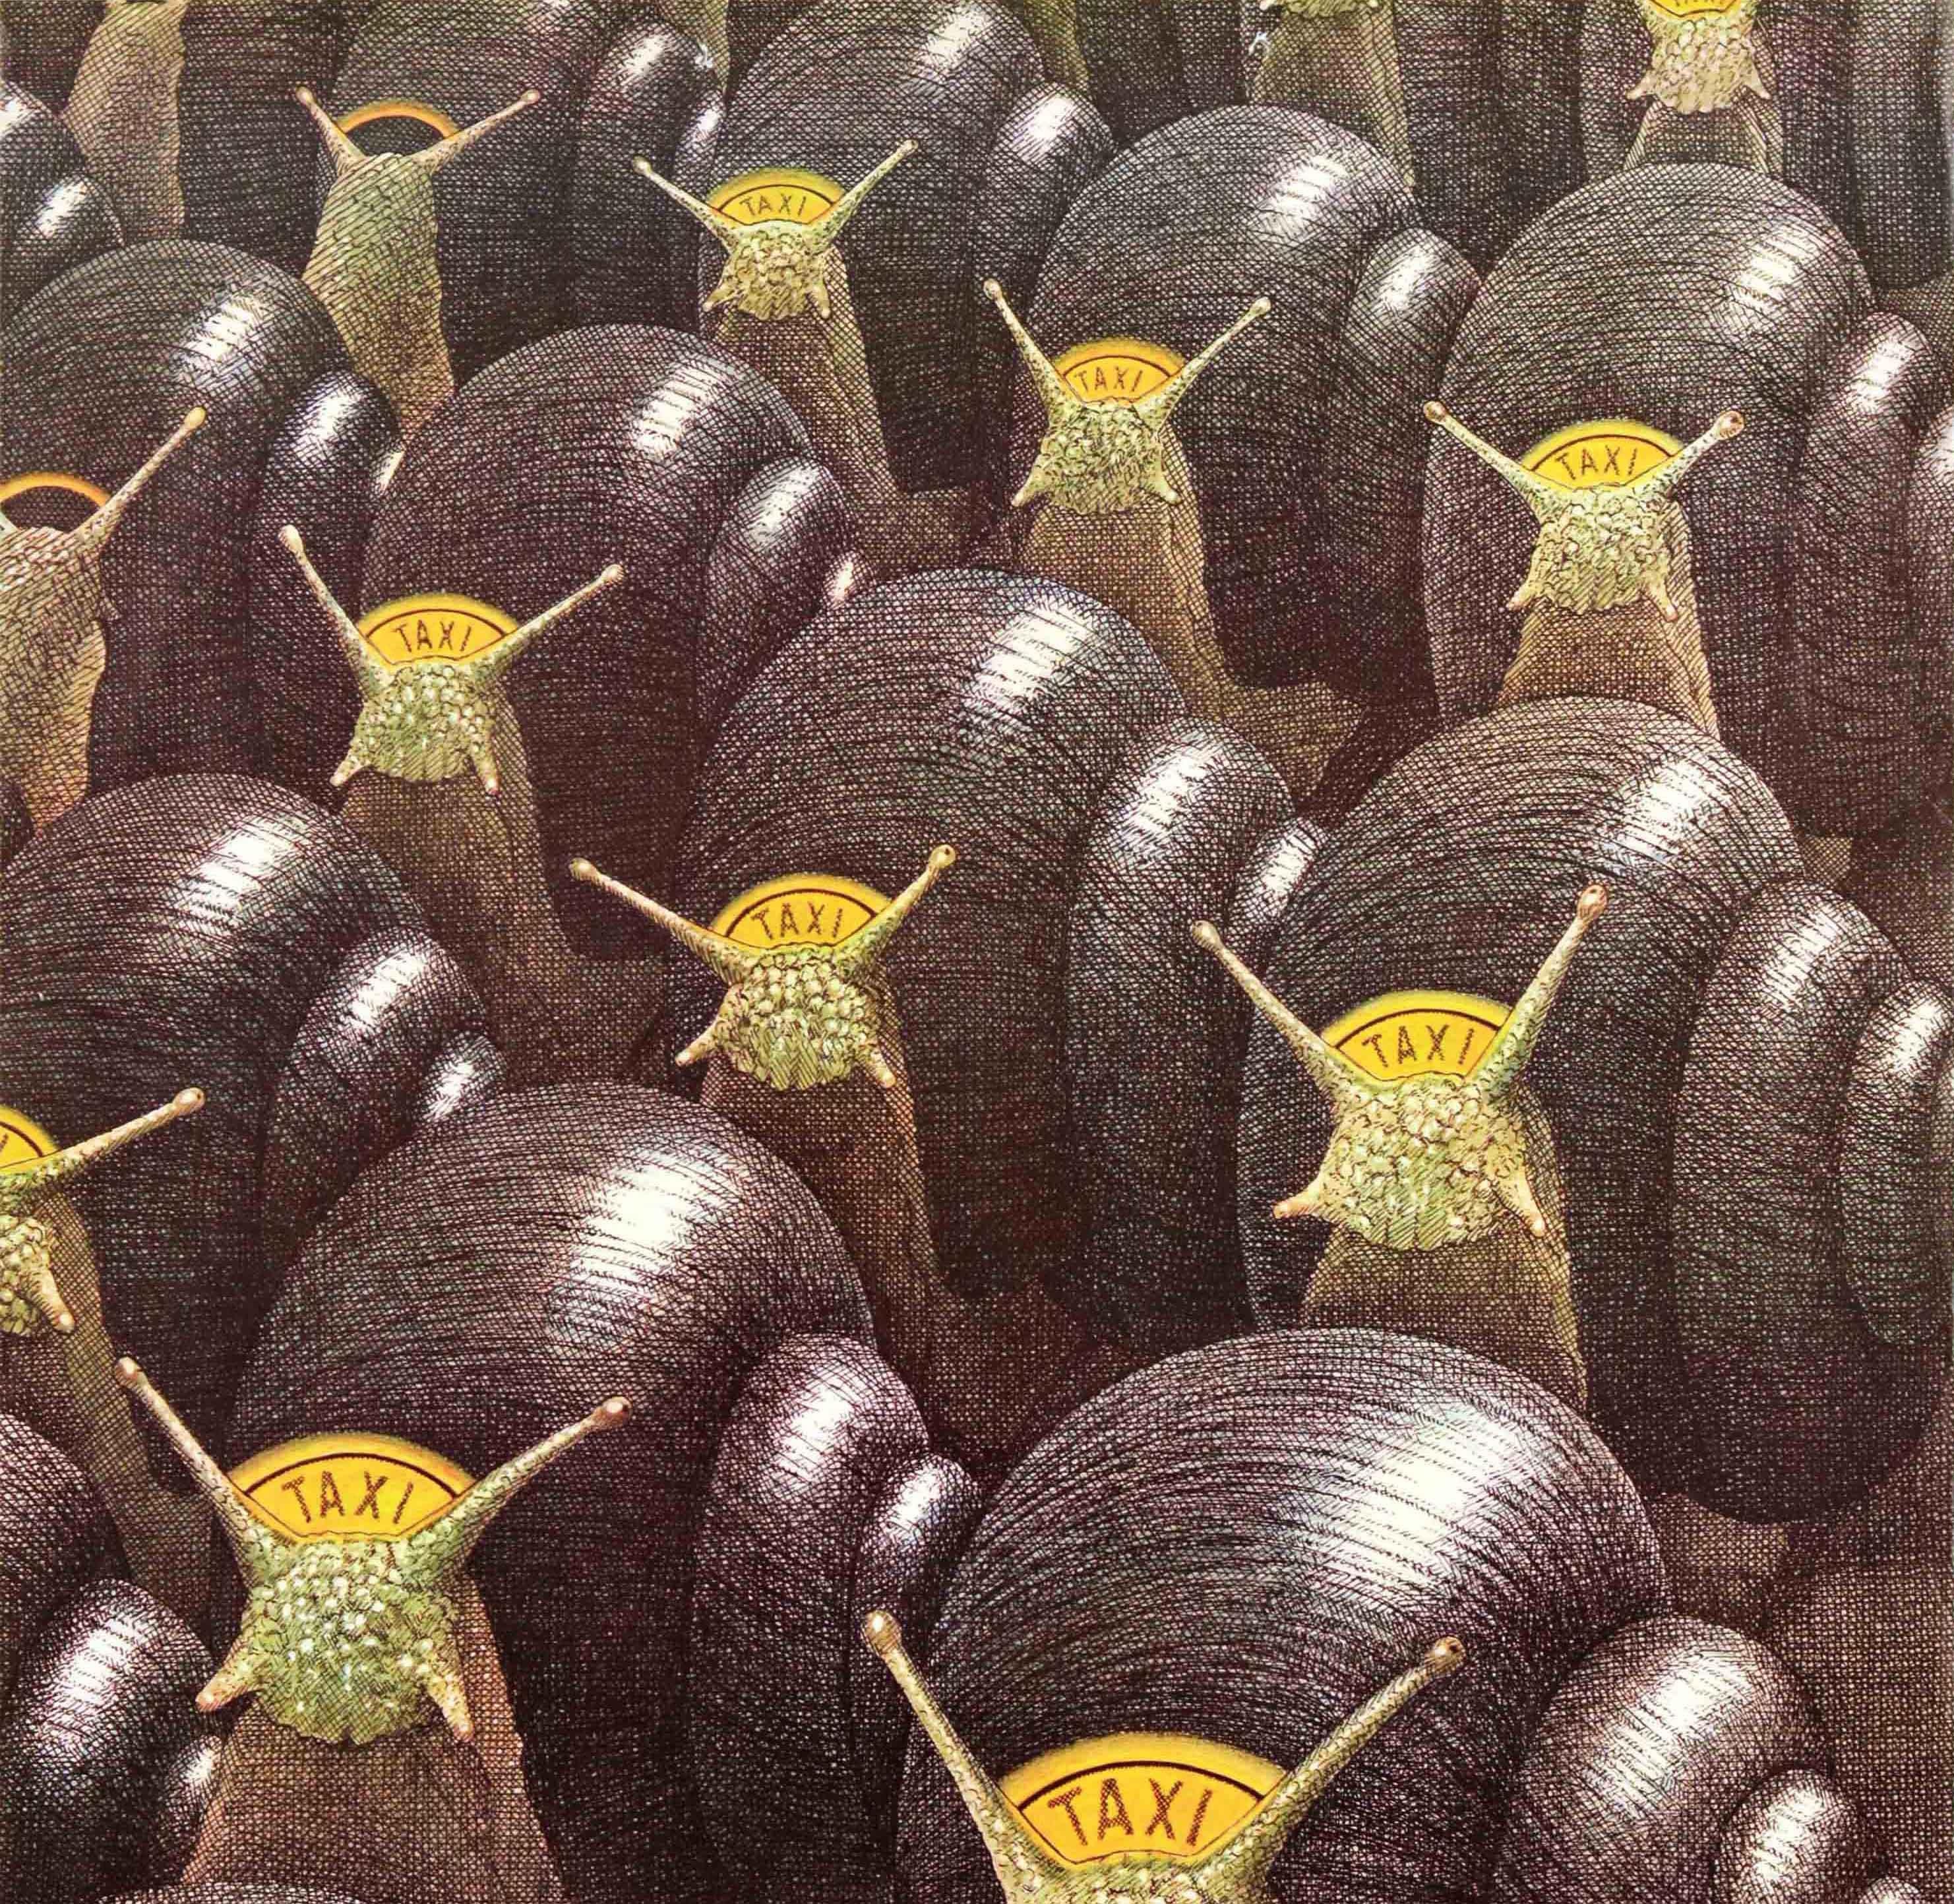 British Original Vintage London Underground Poster LT Snail Taxi Or Take The Tube Art